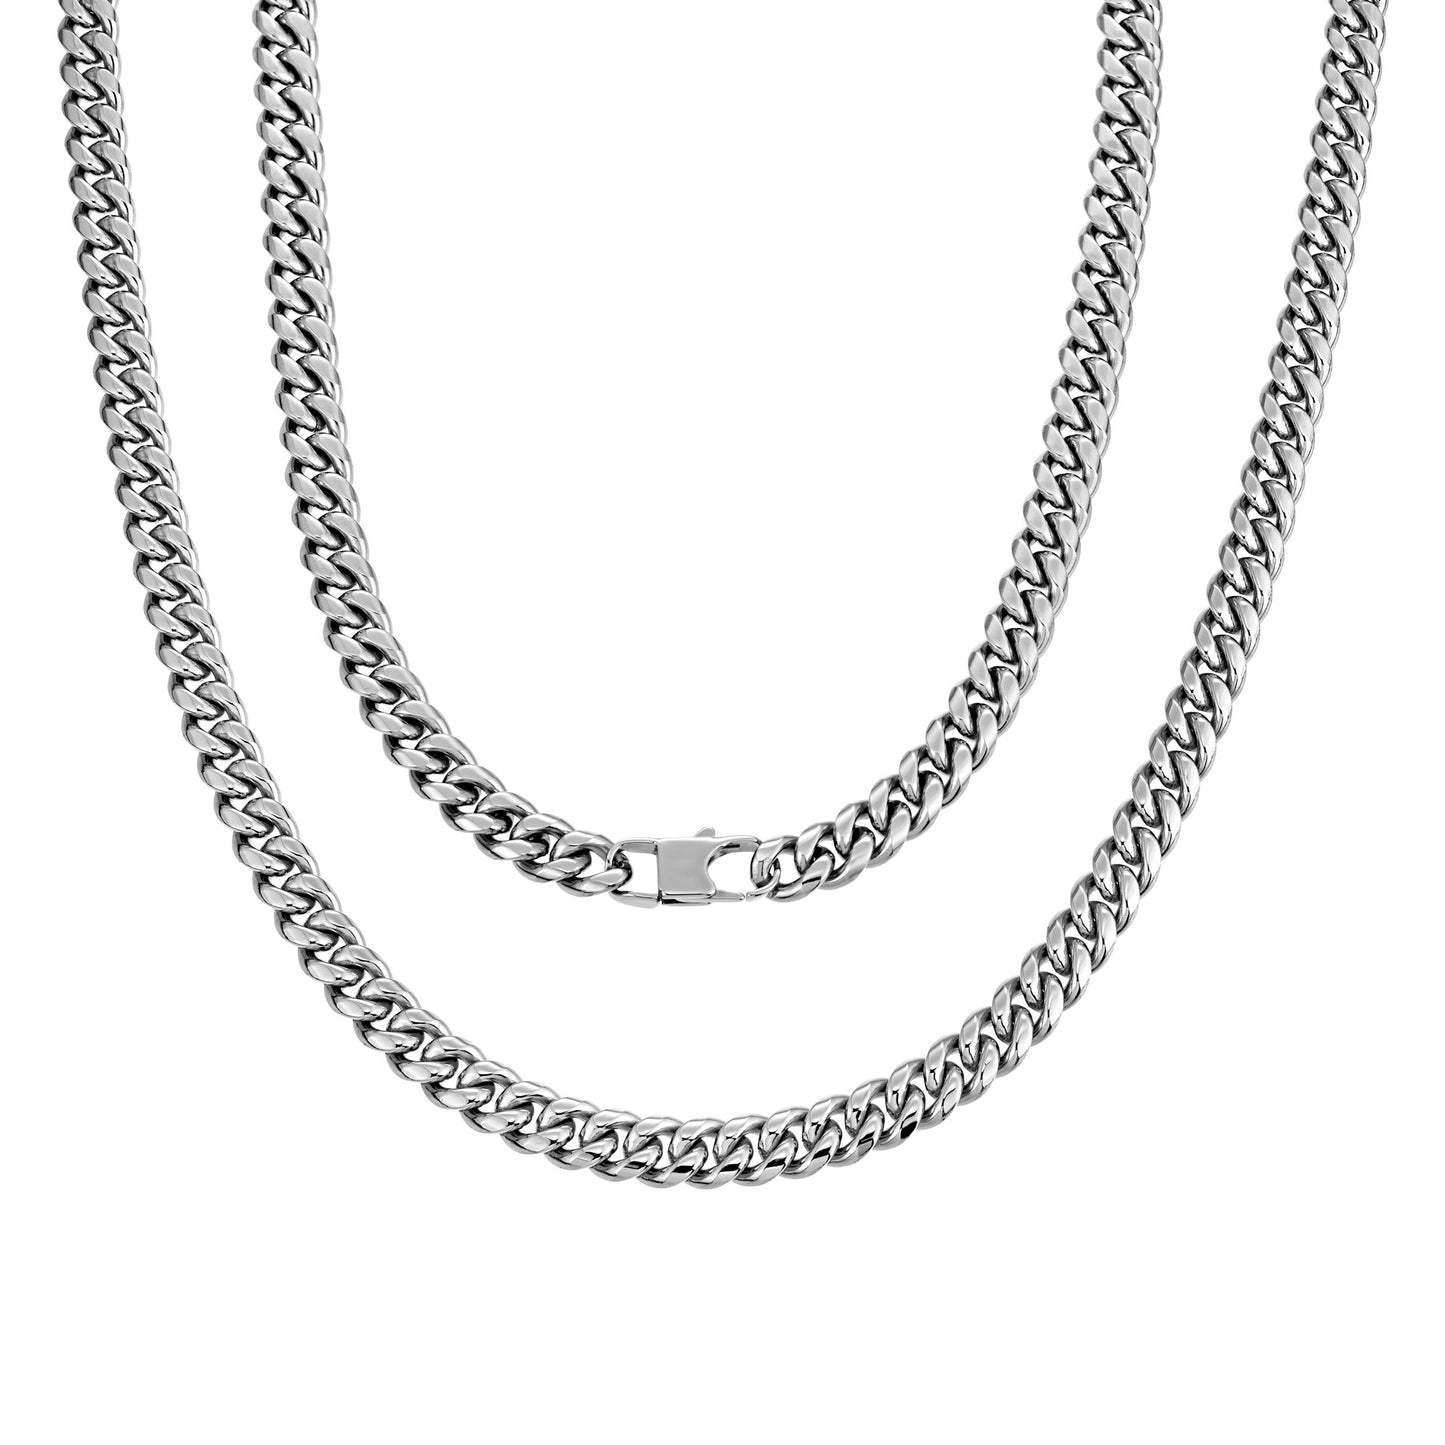 10mm steel Necklace N00177